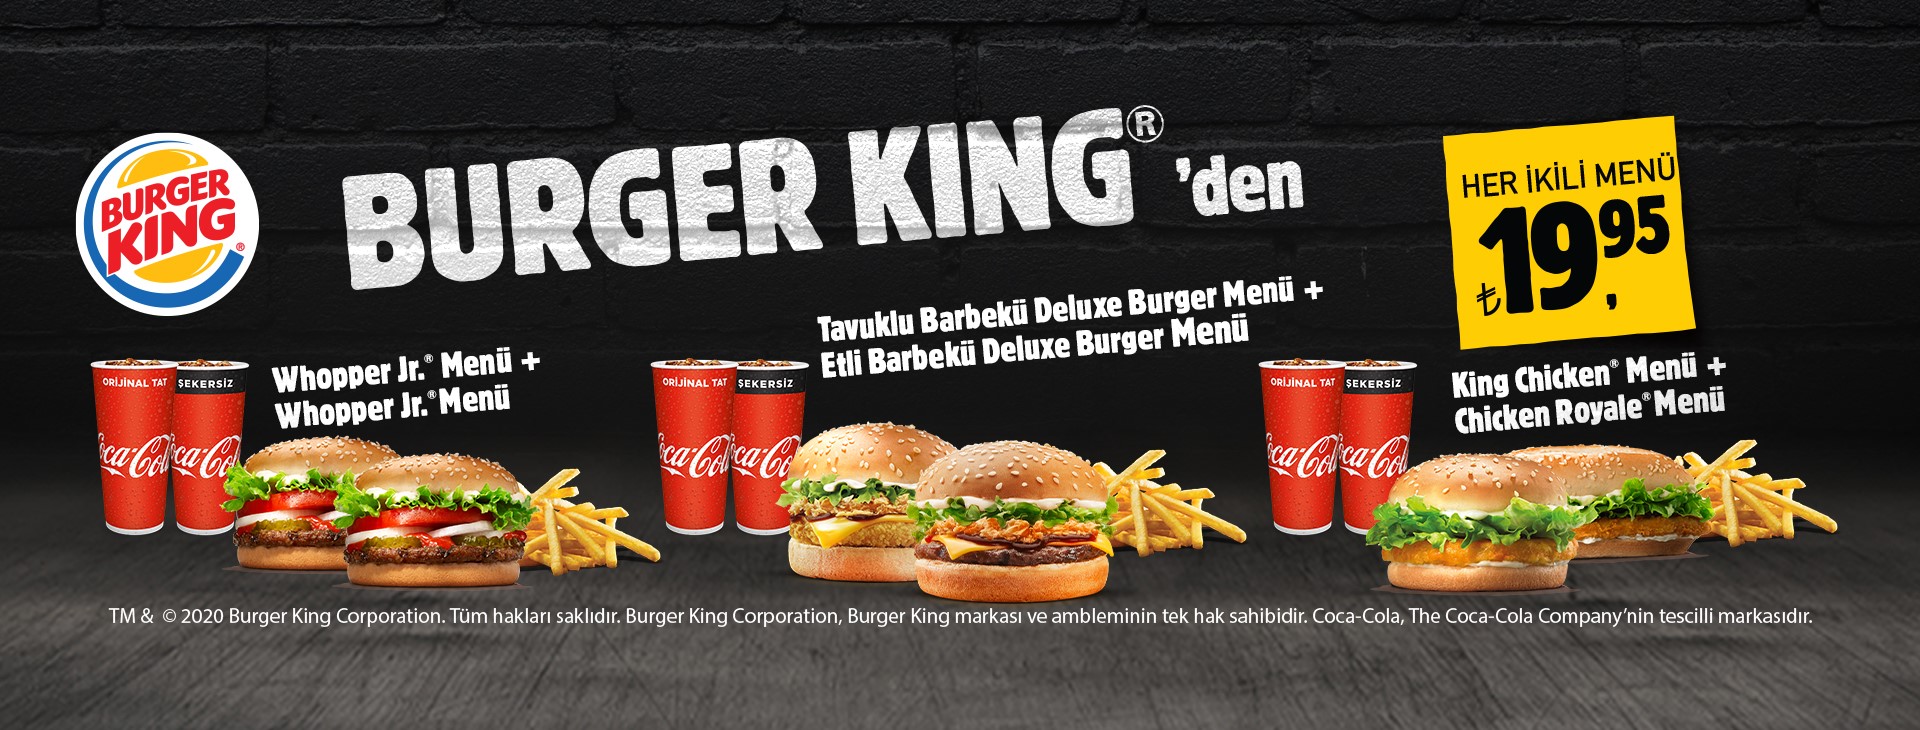 Burger King Kral Ikili Kampanyasi 06 11 2019 Tr Promotons Com